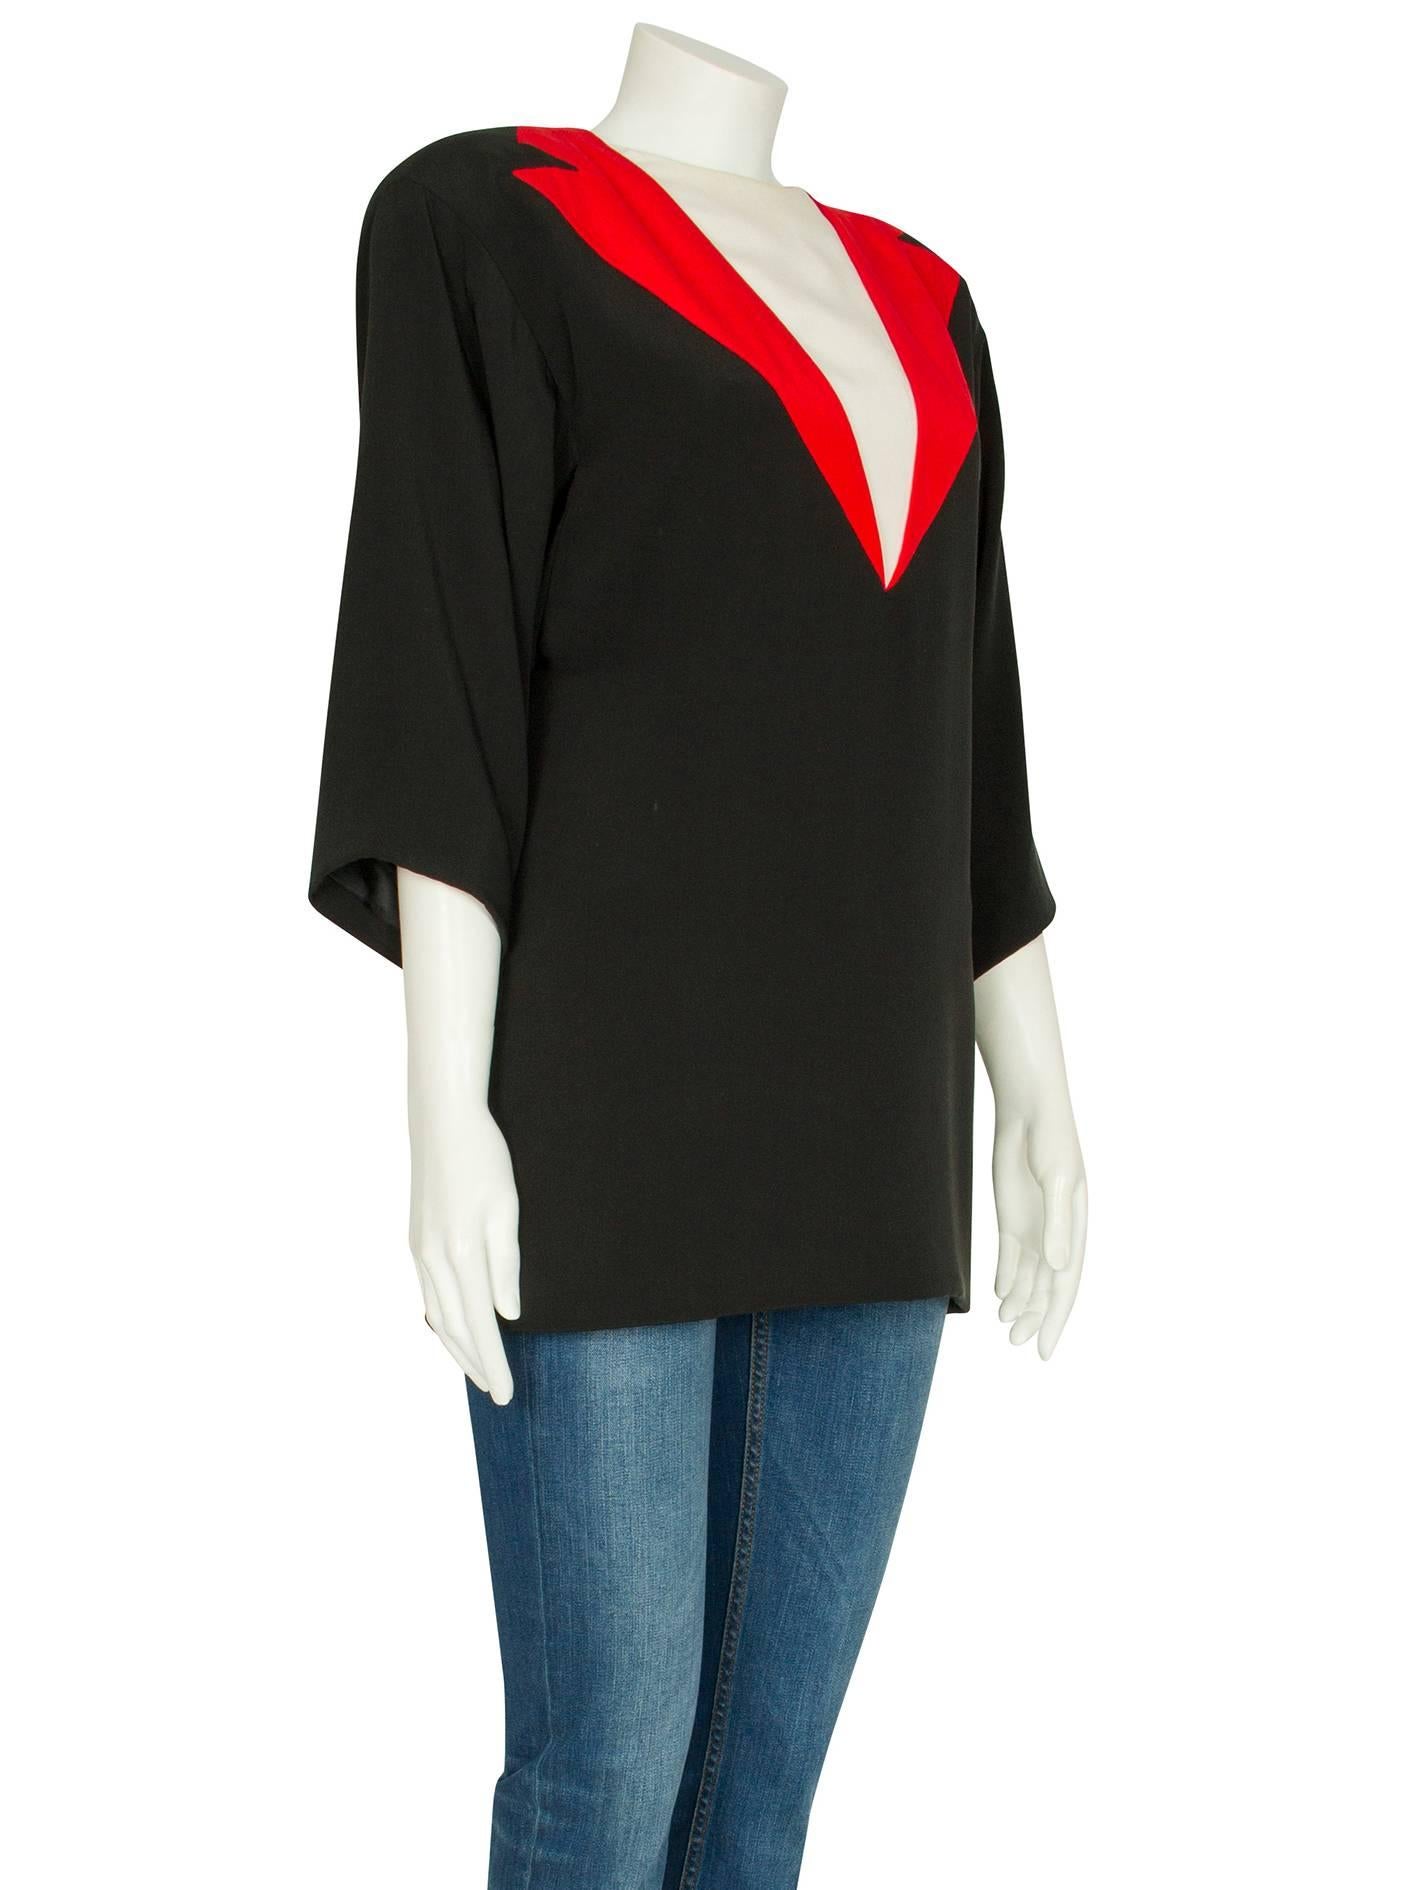 Women's S/S 1983 Dior Couture Black Red & Ivory Silk Trompe L'Oeil Boxy Tunic For Sale